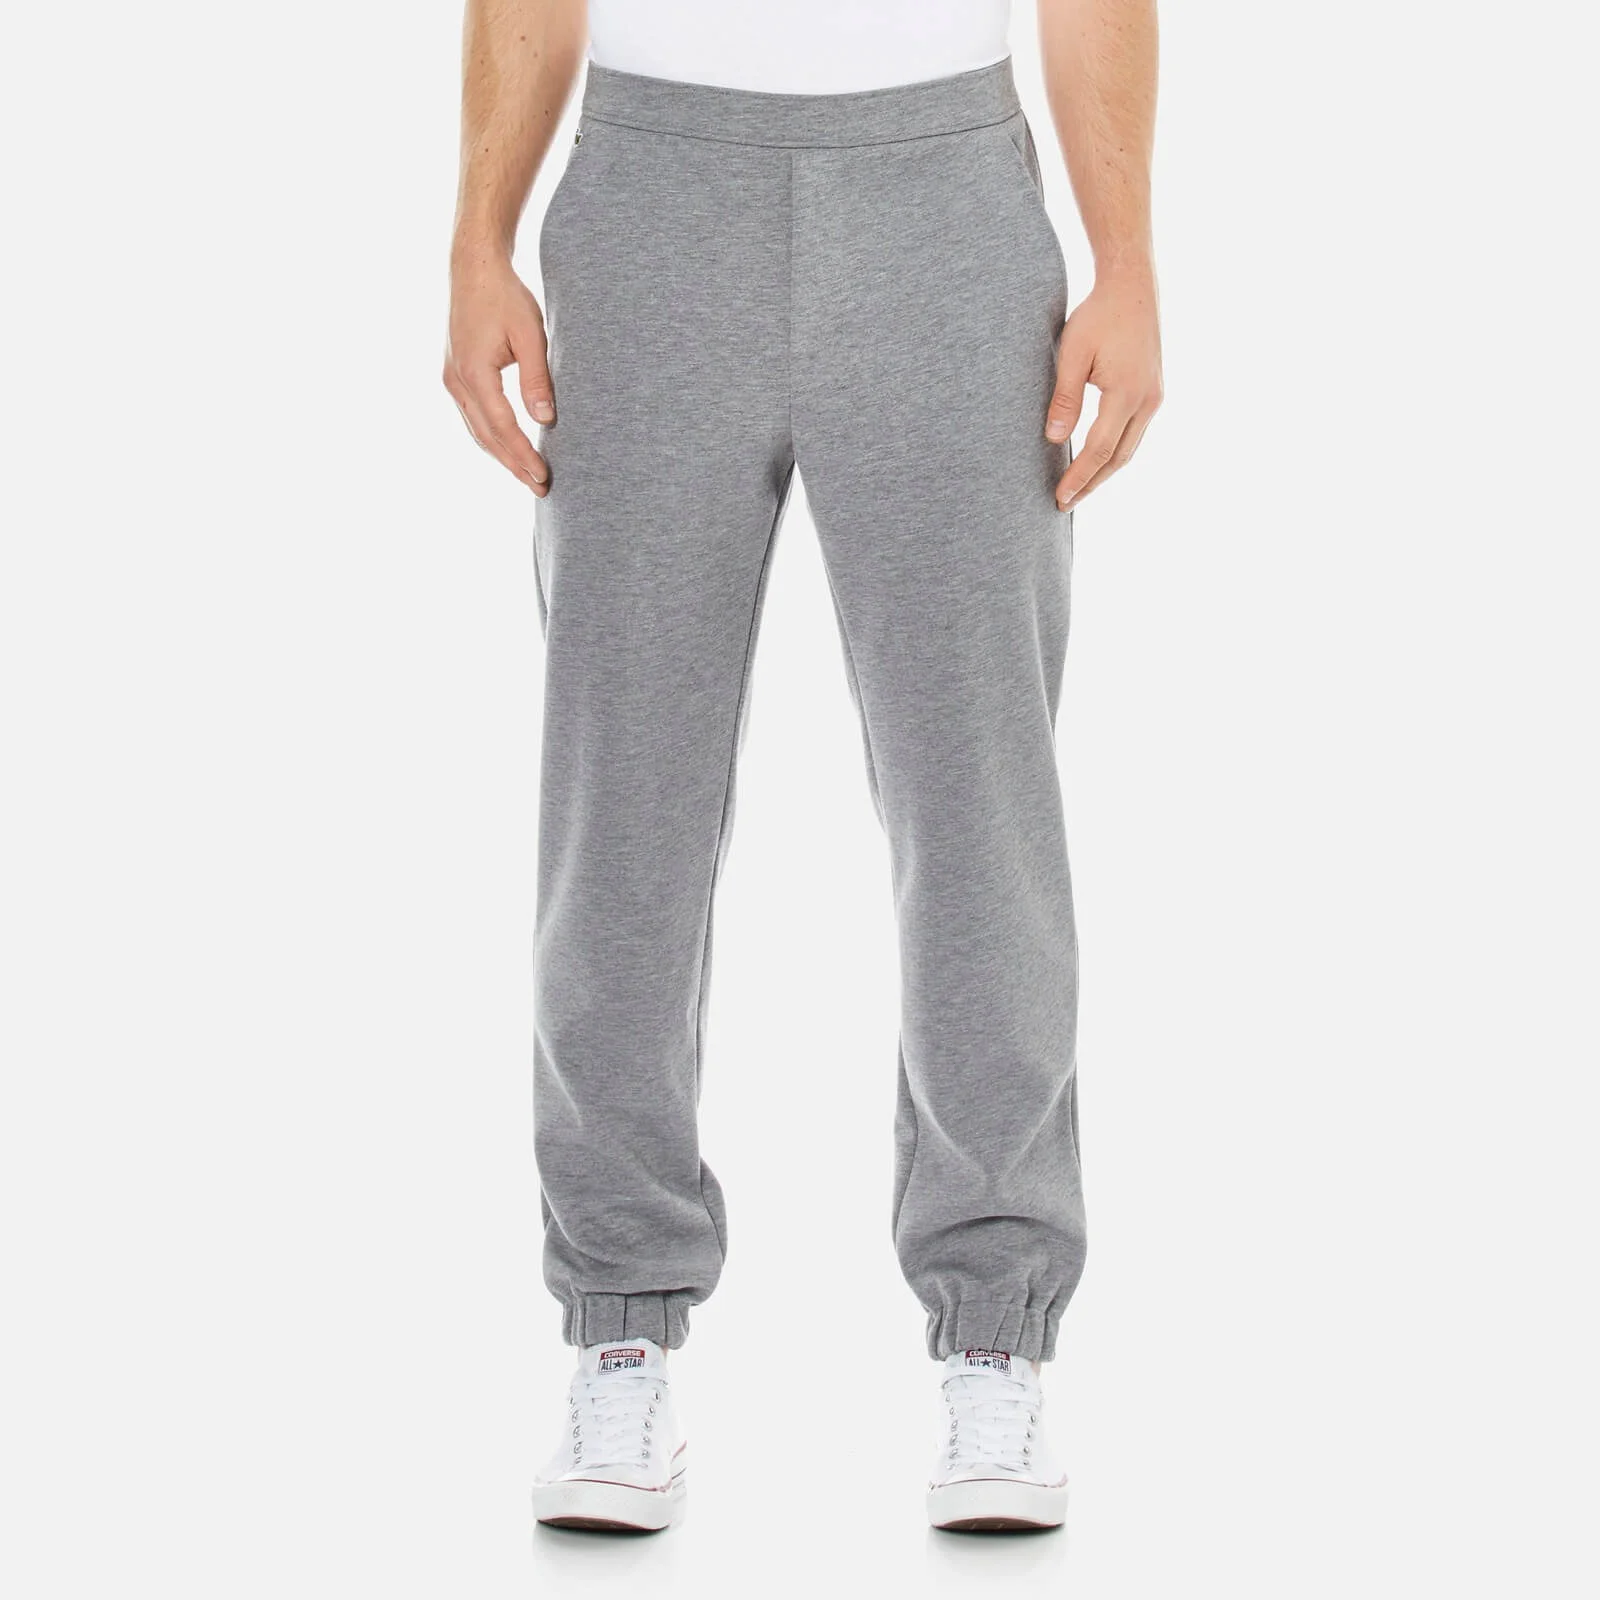 Lacoste L!ve Men's Slim Fit Pants in Double Sided Jersey - Grey Image 1